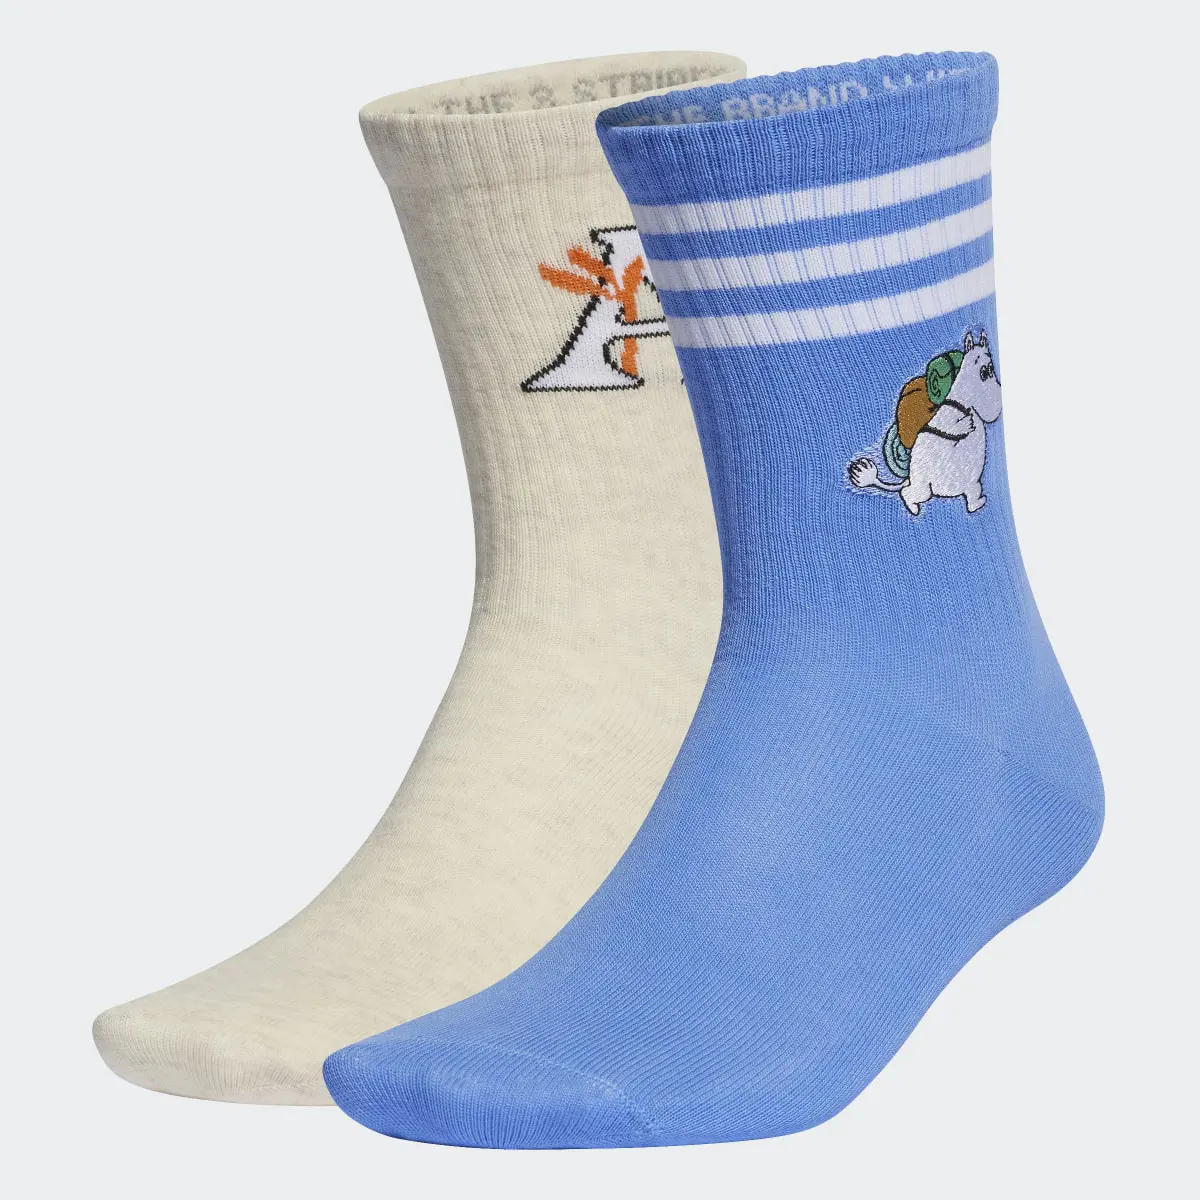 Adidas Originals X Moomin Bilekli Çorap - 2 Çift. 2